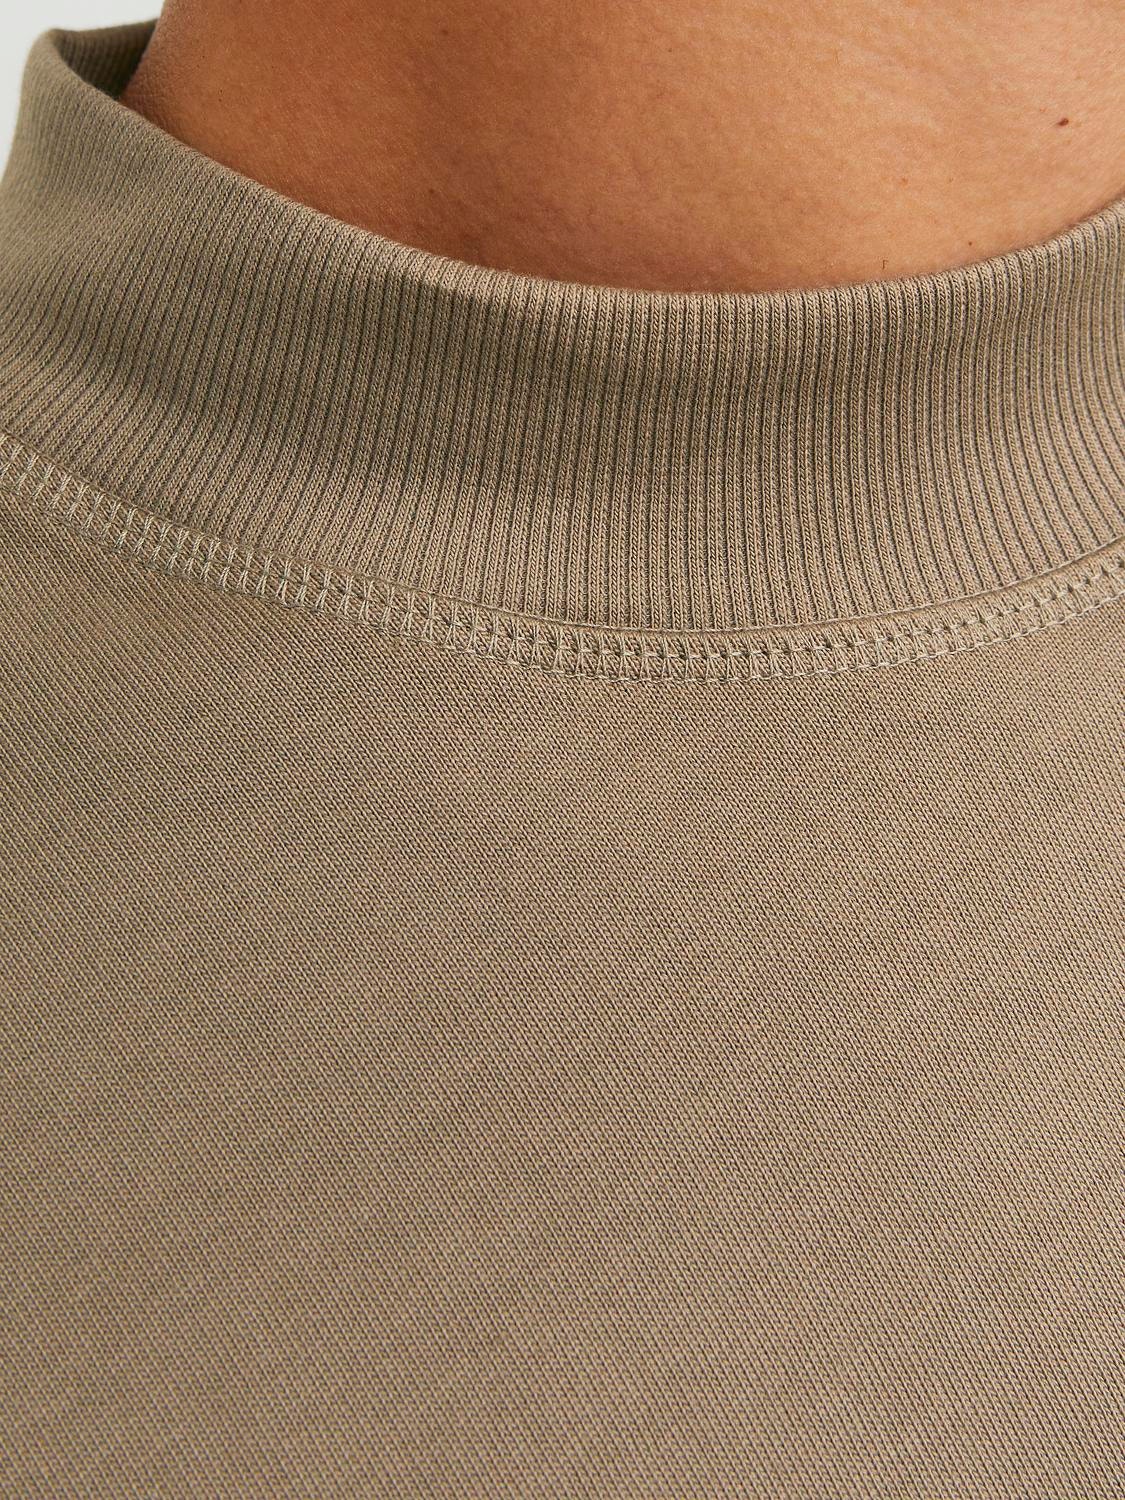 Jack & Jones Plain Crewn Neck Sweatshirt -Brindle - 12247596